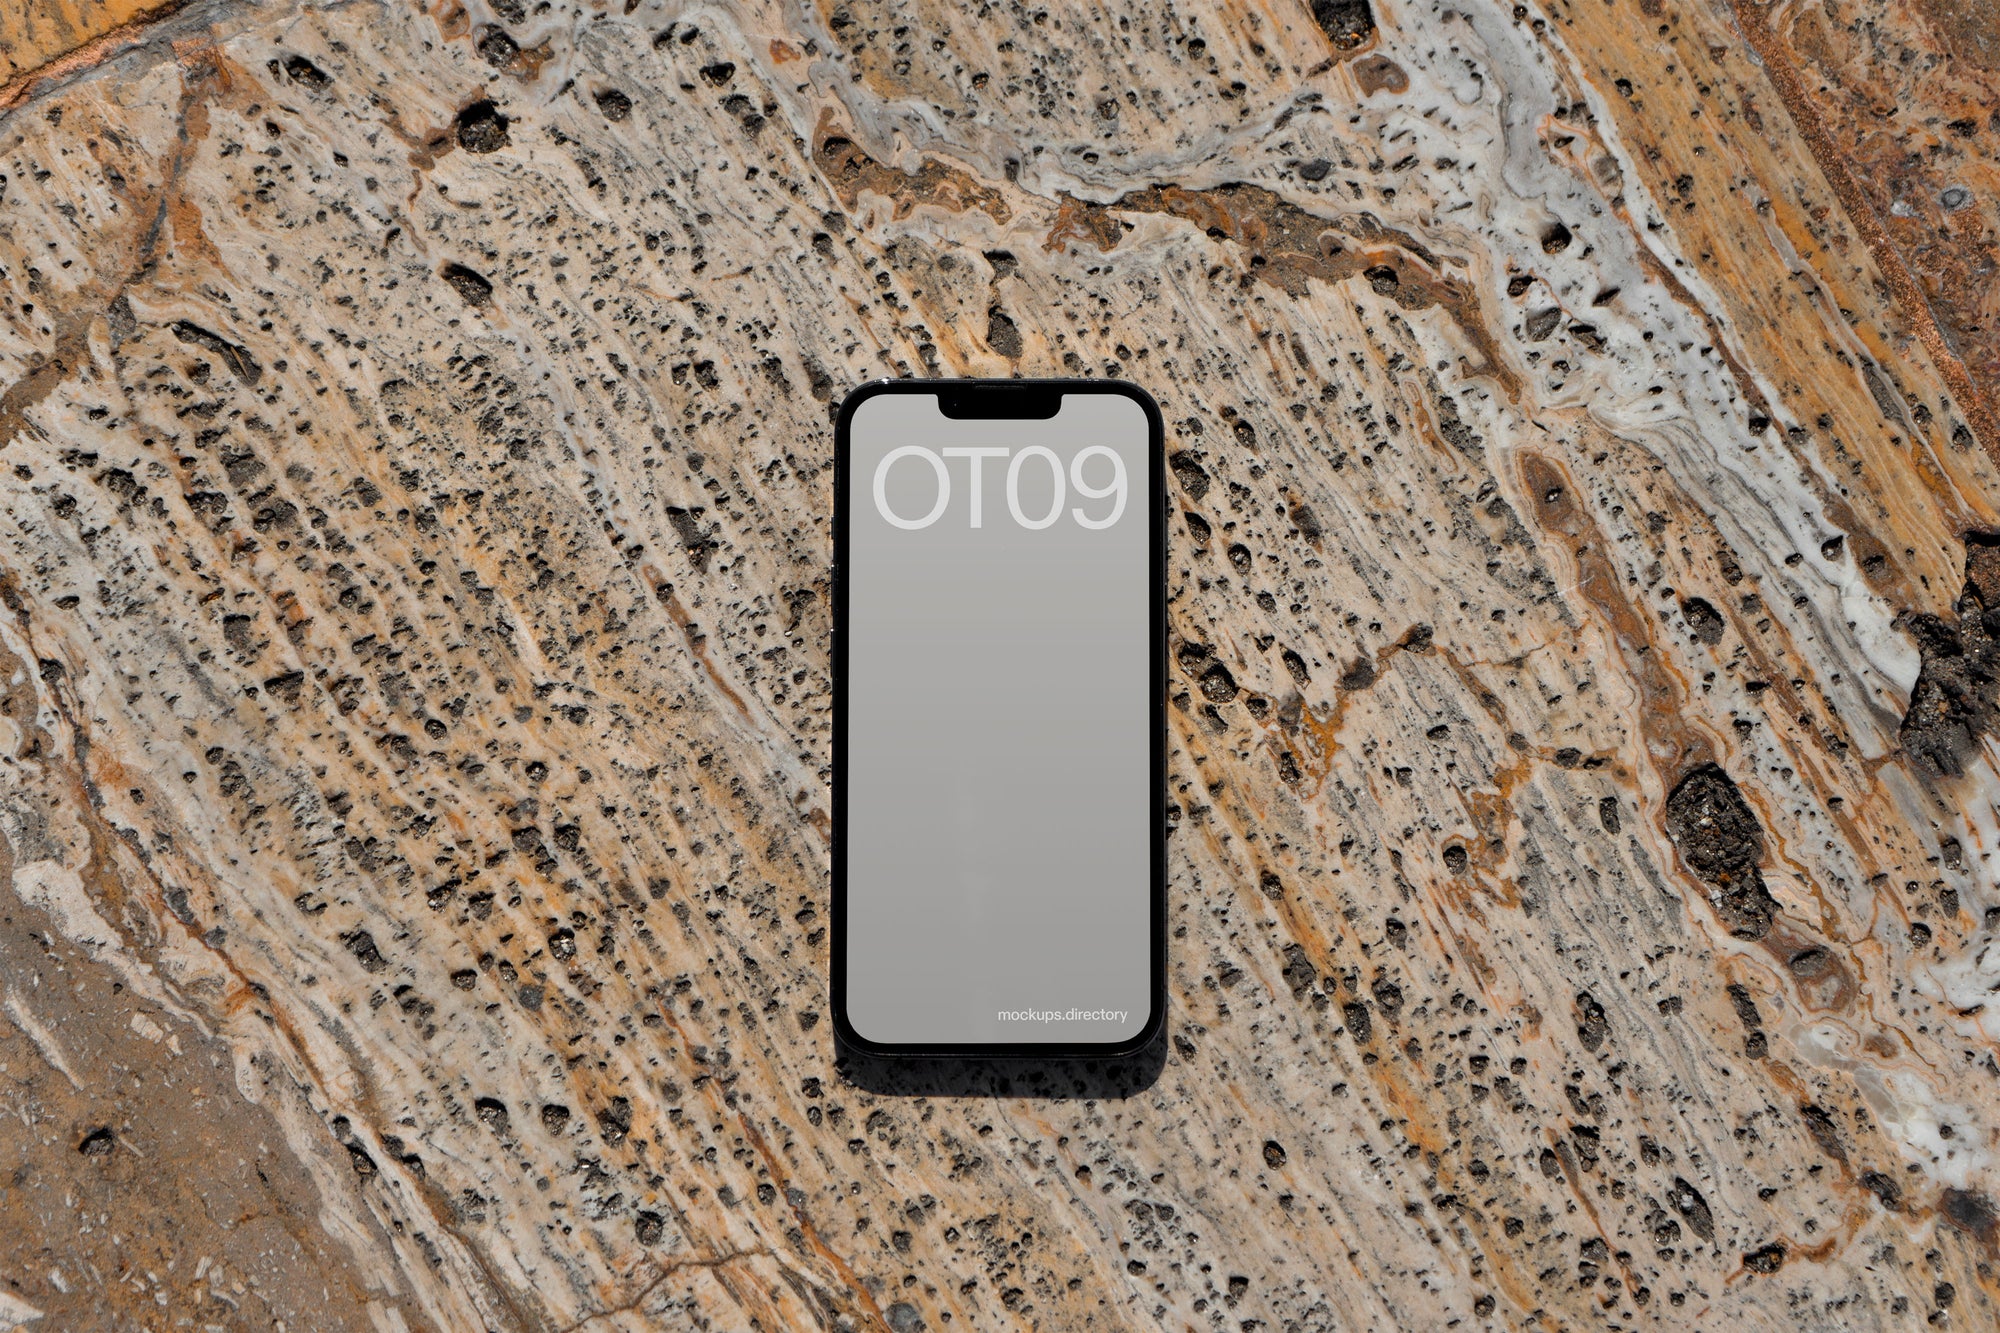 OT09 — iPhone 13 Pro